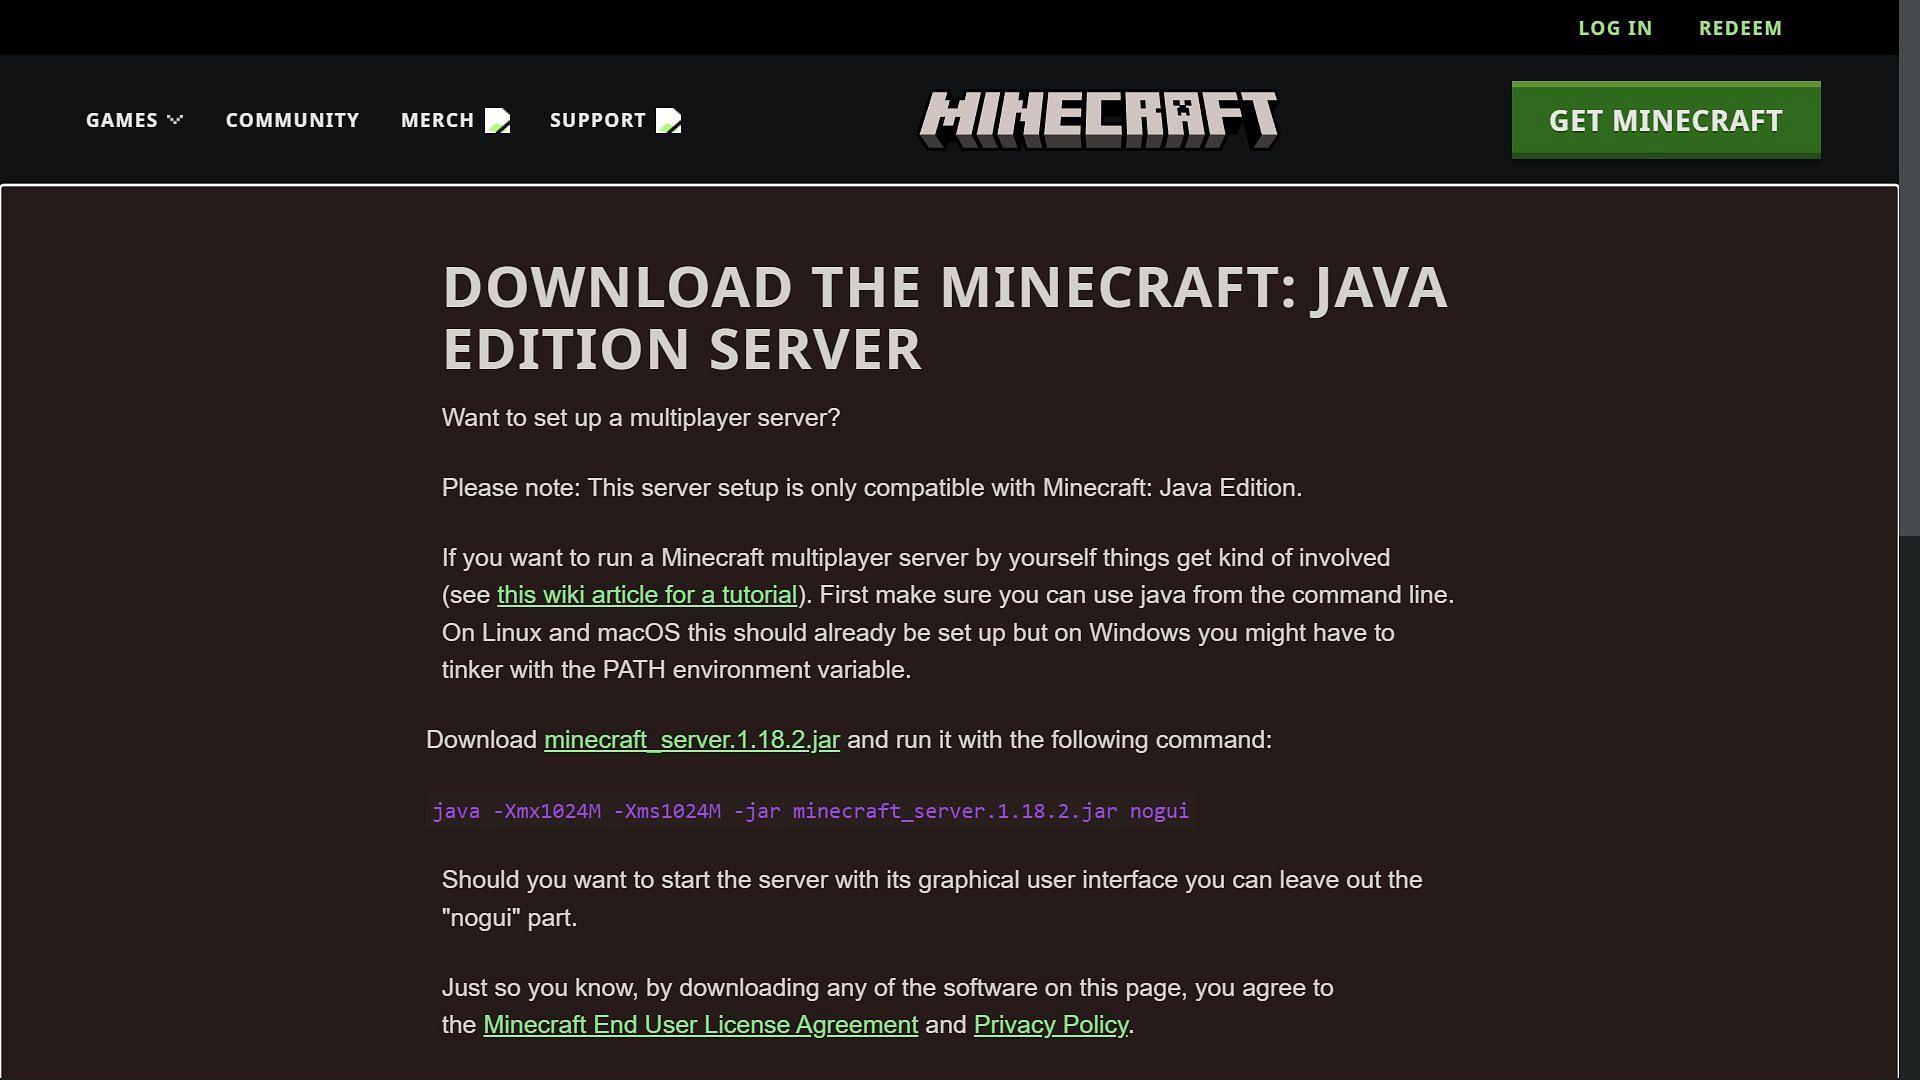 Download page for the .jar server file for Minecraft Java 1.19 update (Image via Sportskeeda)